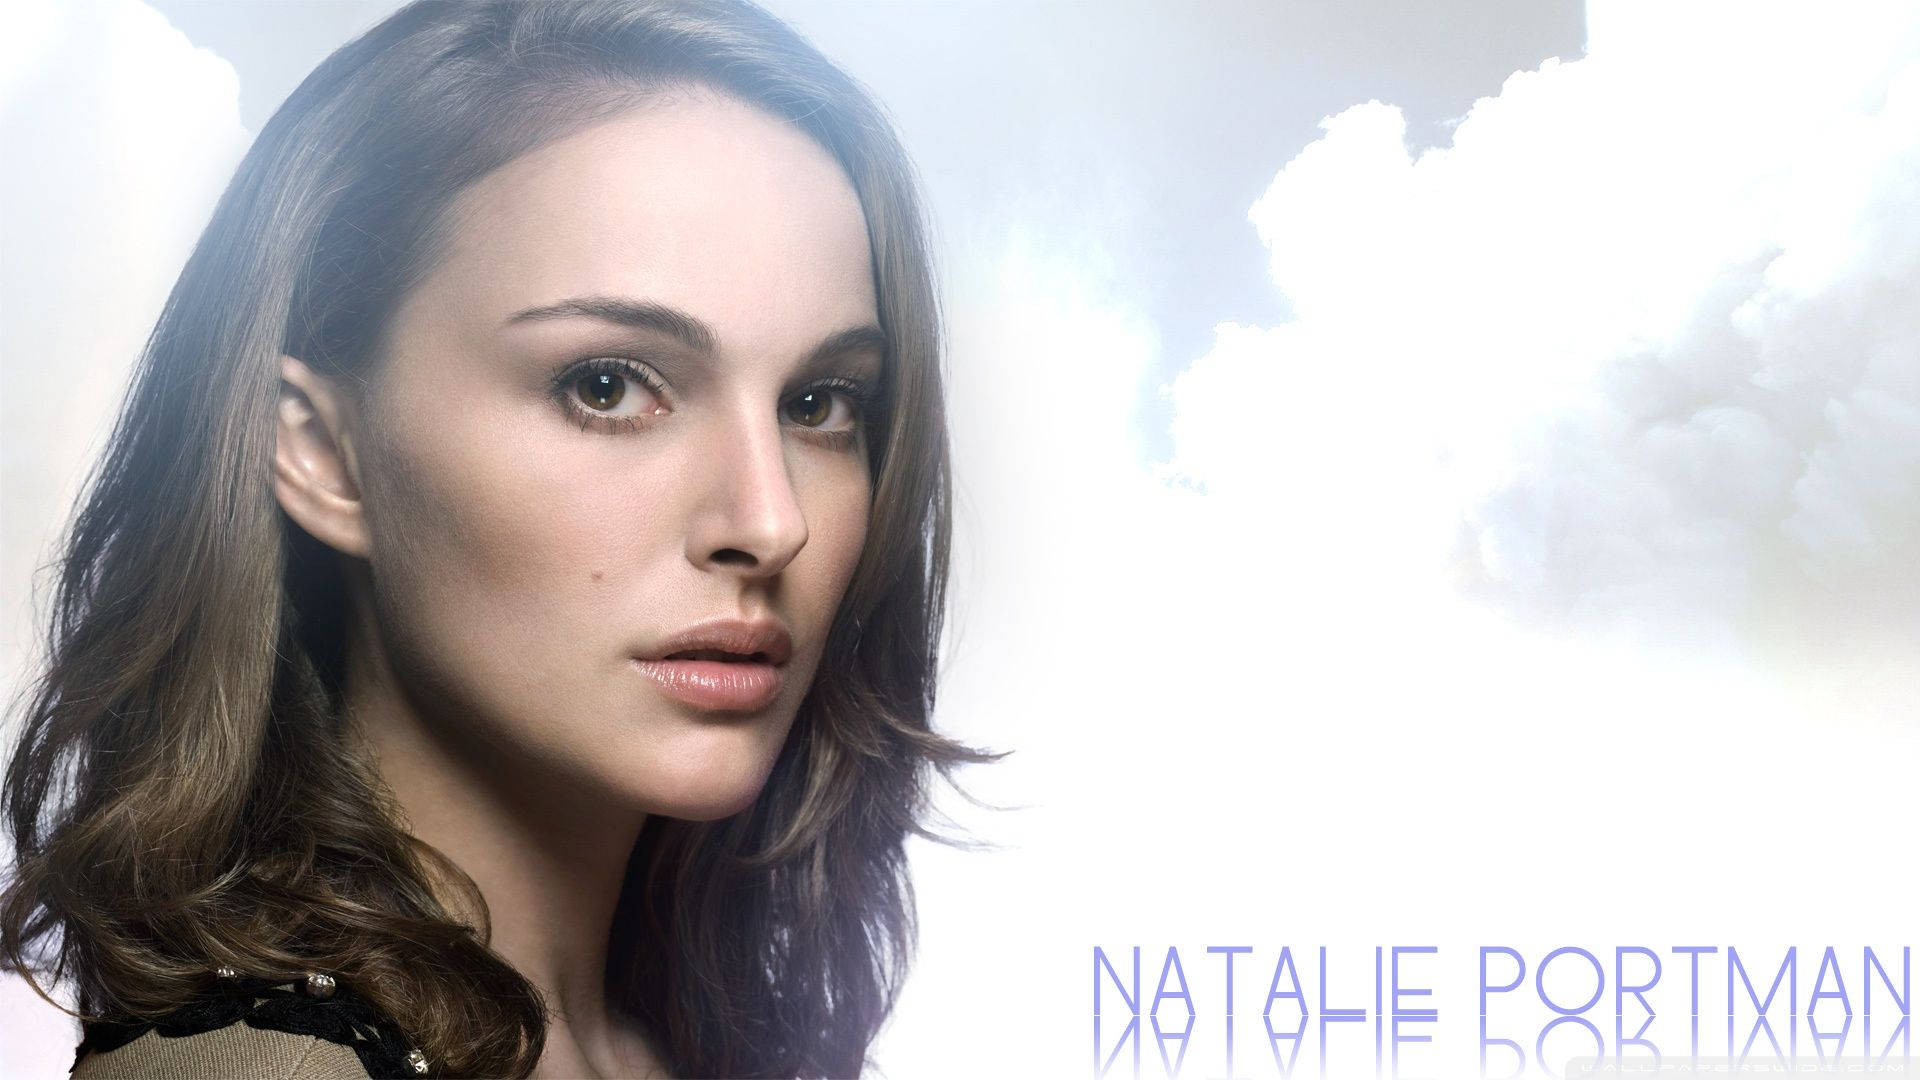 Caption: Natalie Portman Poses Against A Cloudy Background Background